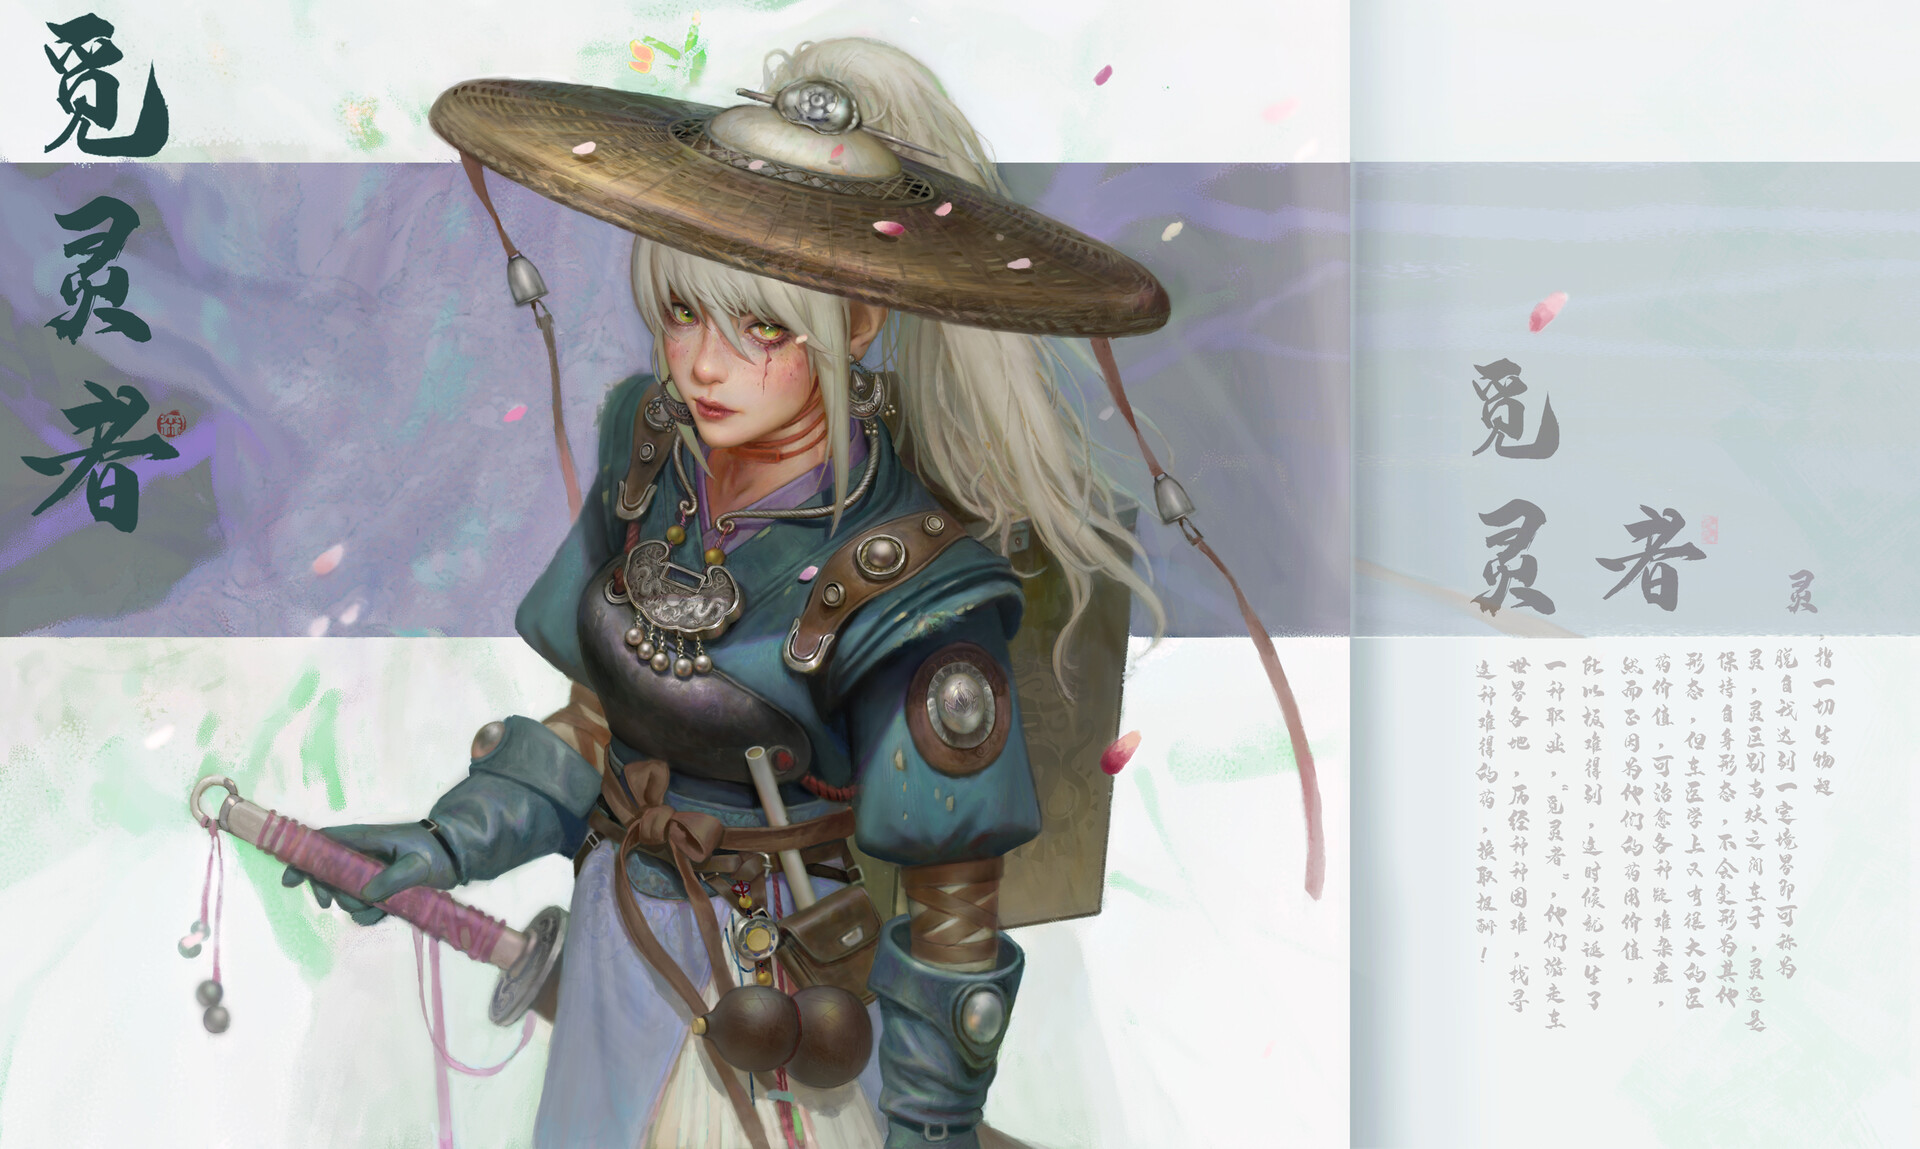 General 1920x1149 Ting Xie drawing women looking at viewer silver hair hat katana kanji ponytail Japanese petals armor scars digital art